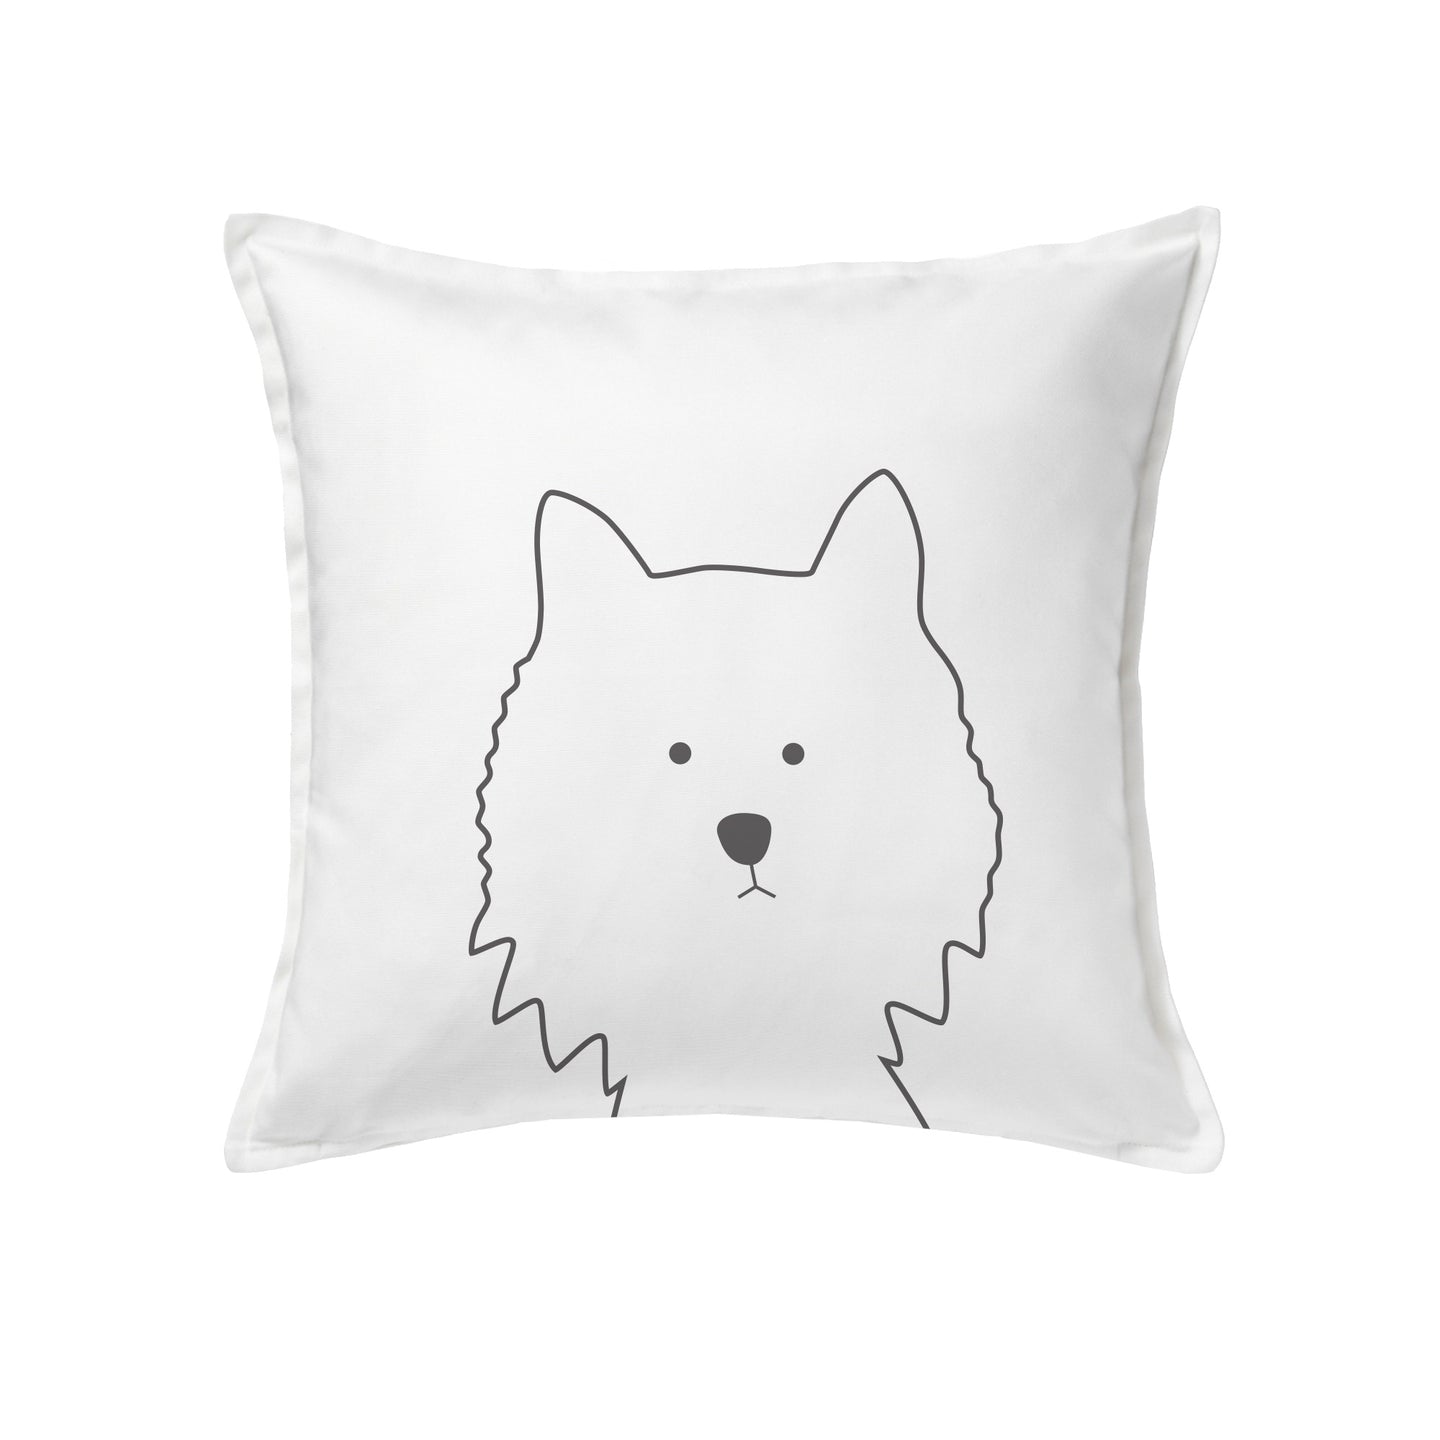 Dog cushion or cover 50x50cm (20x20